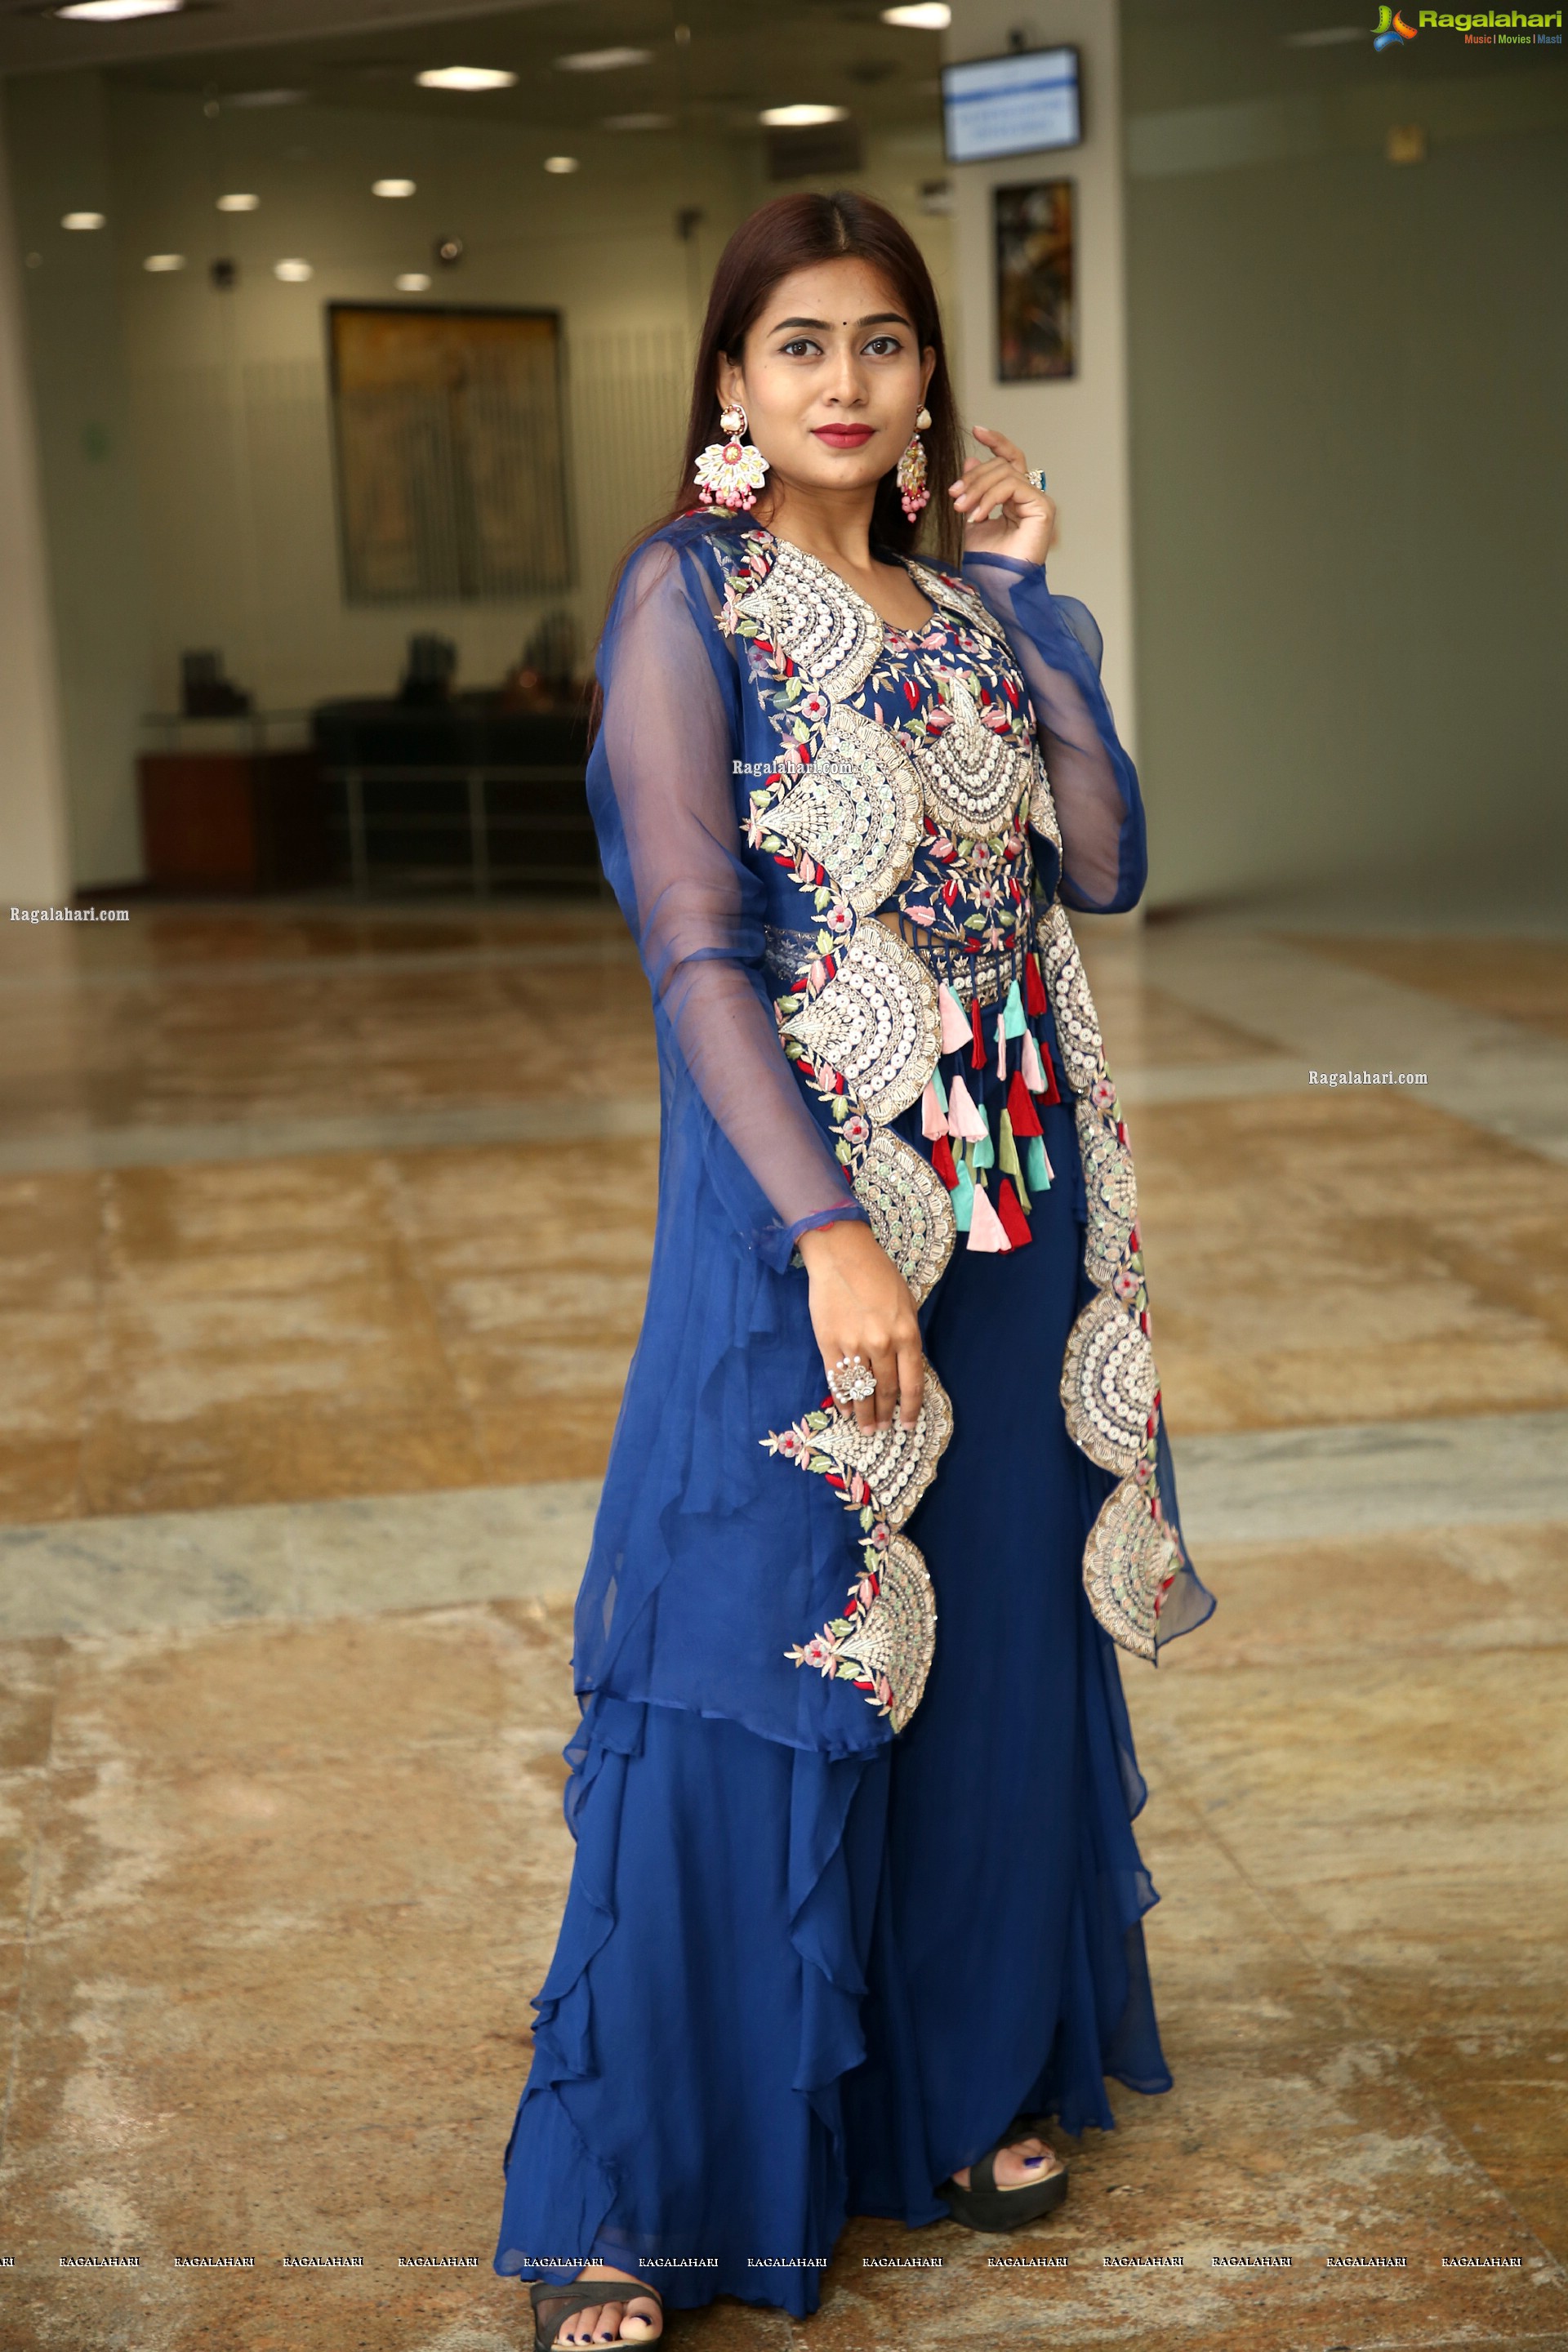 Sheetal in Blue Designer Lehenga, HD Photo Gallery